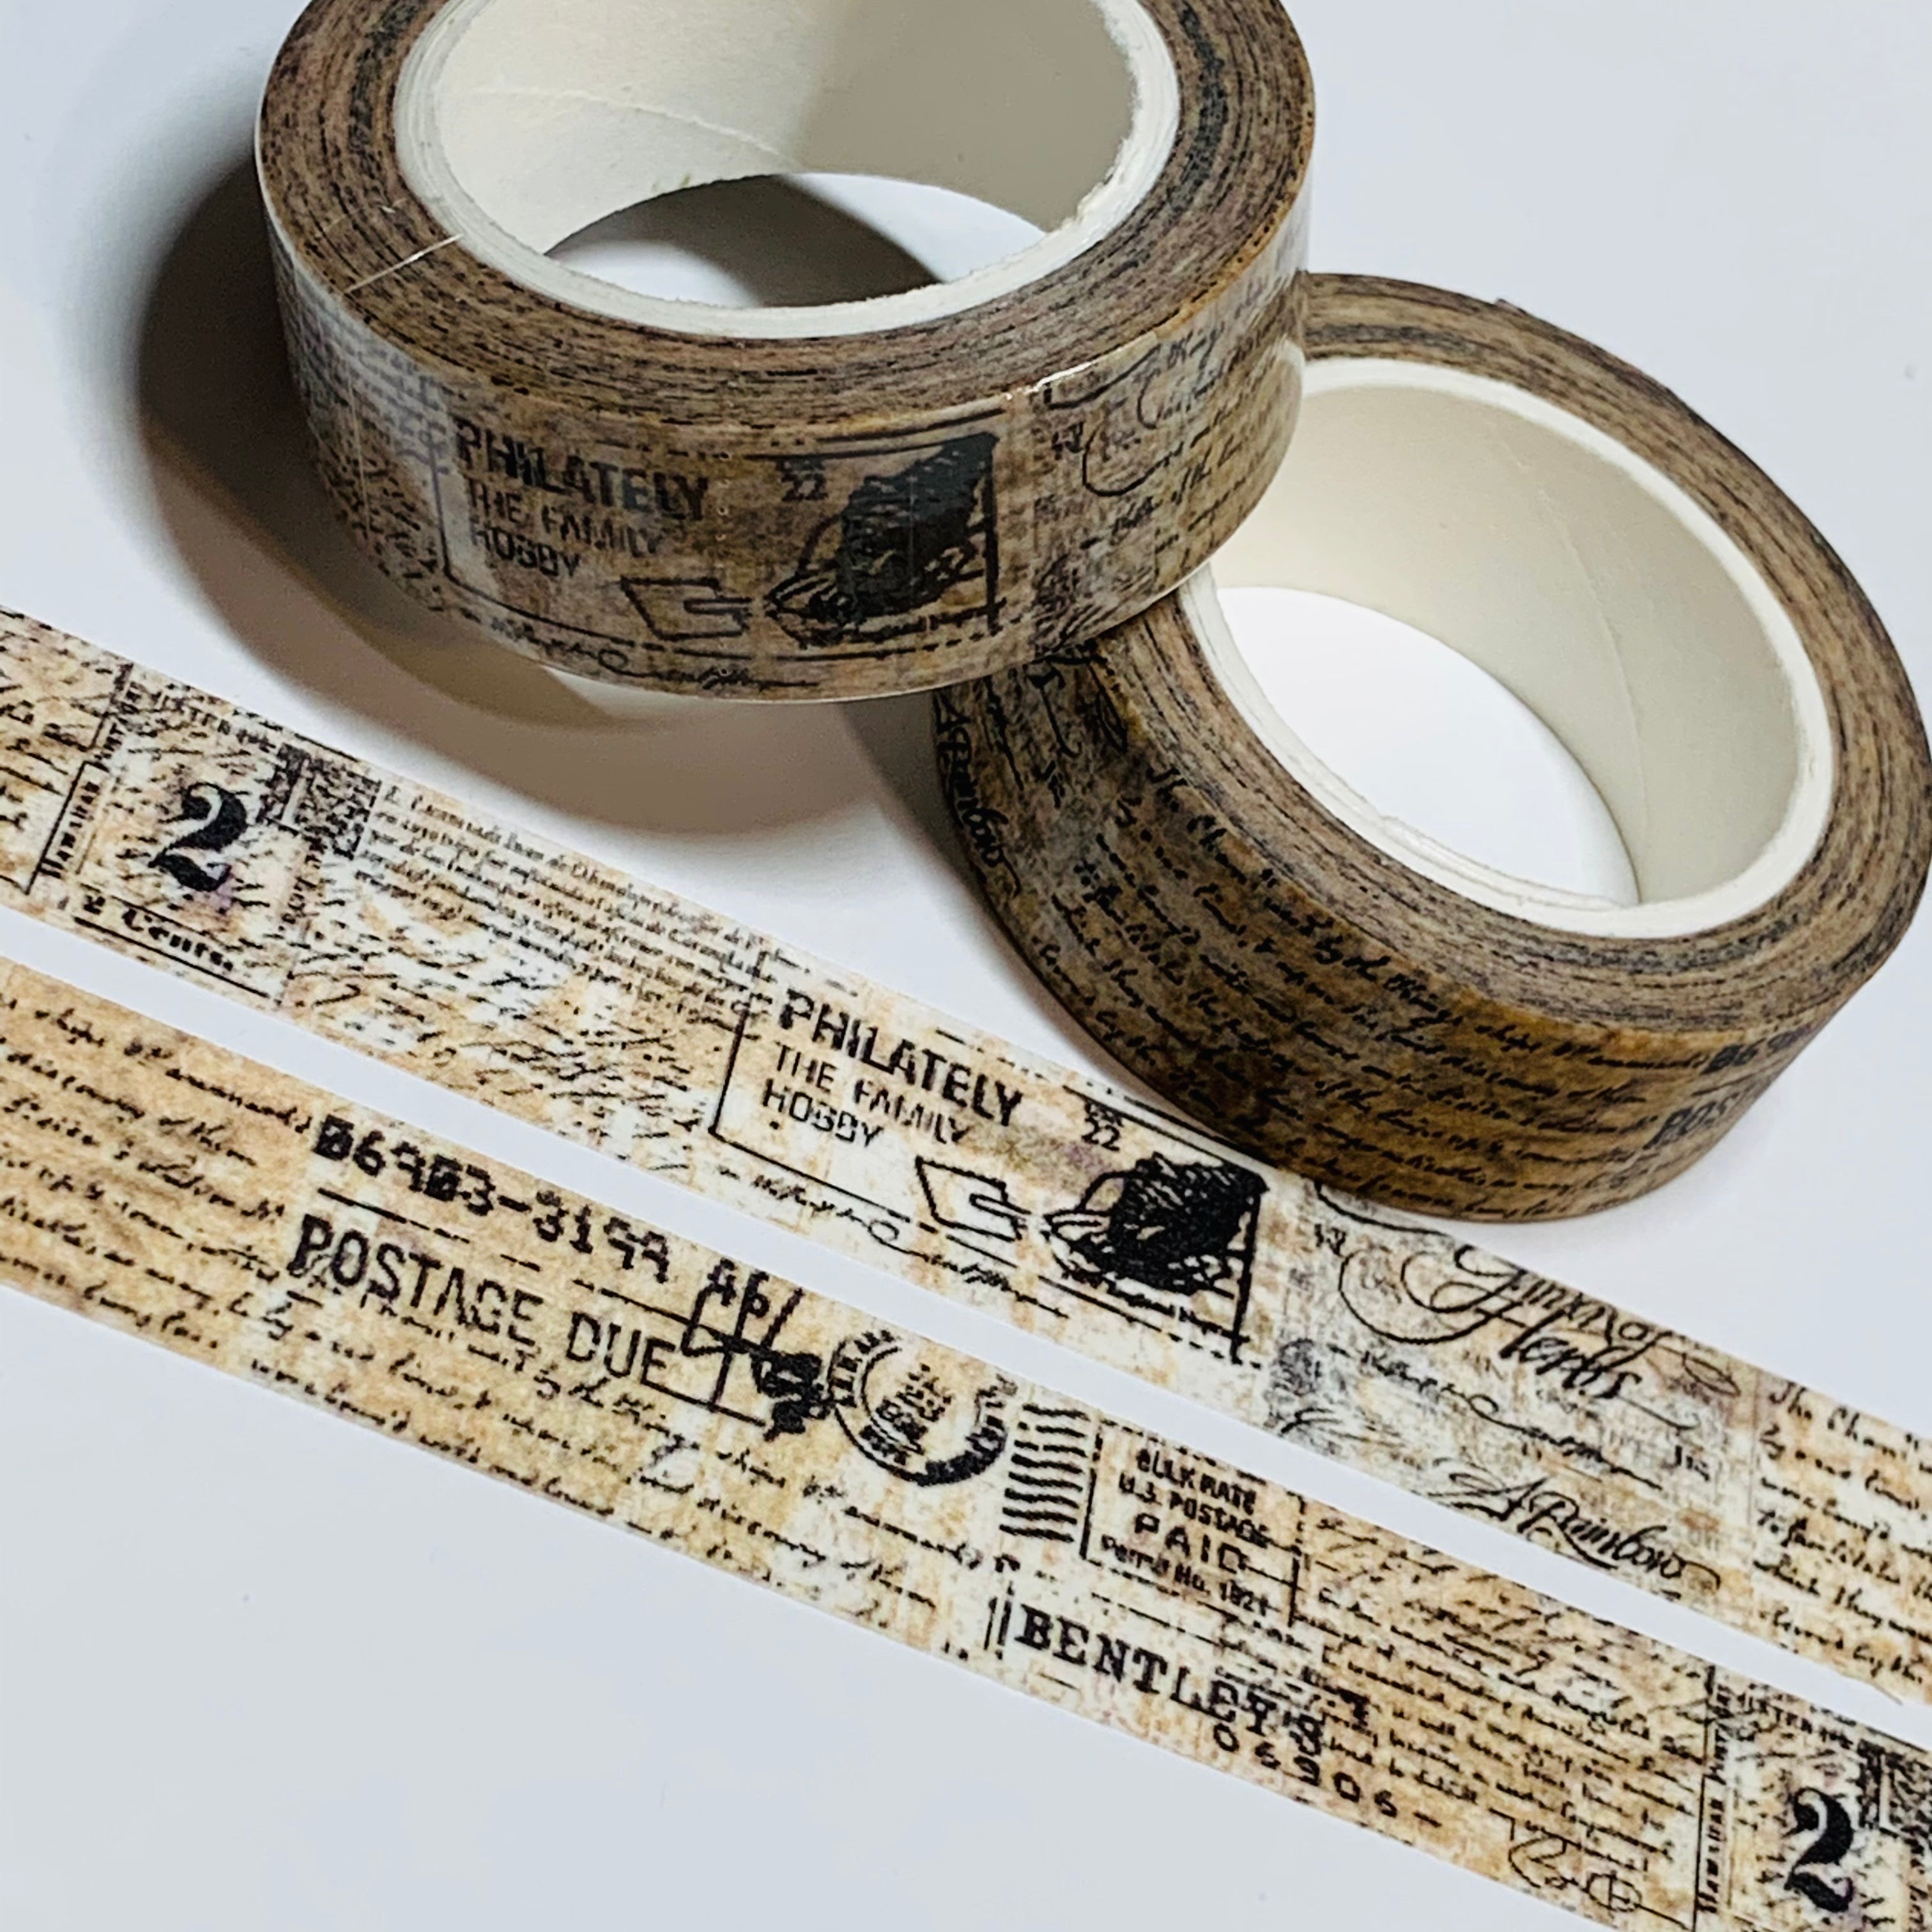 Mino washi – art of Japanese paper